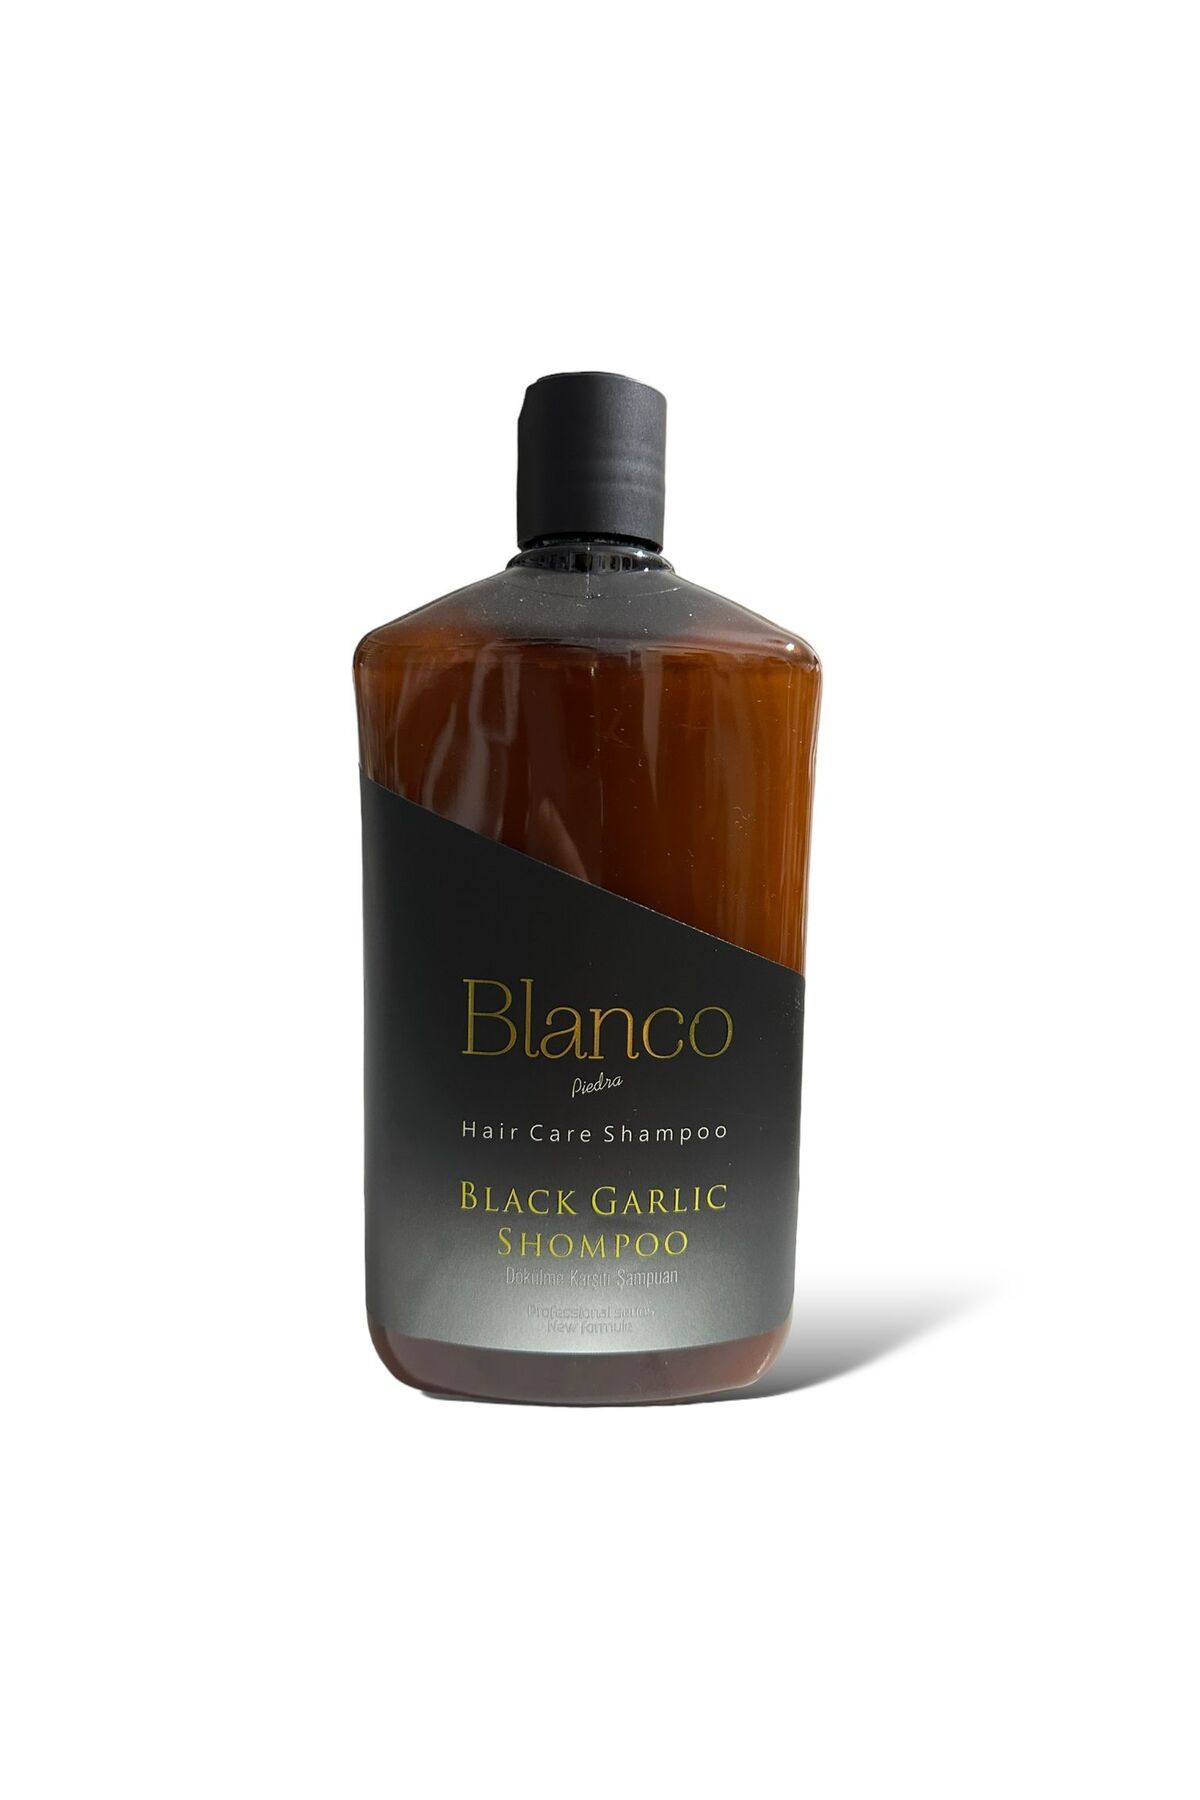 blanco piedra Siyah Sarımsaklı Şampuan 700 ml